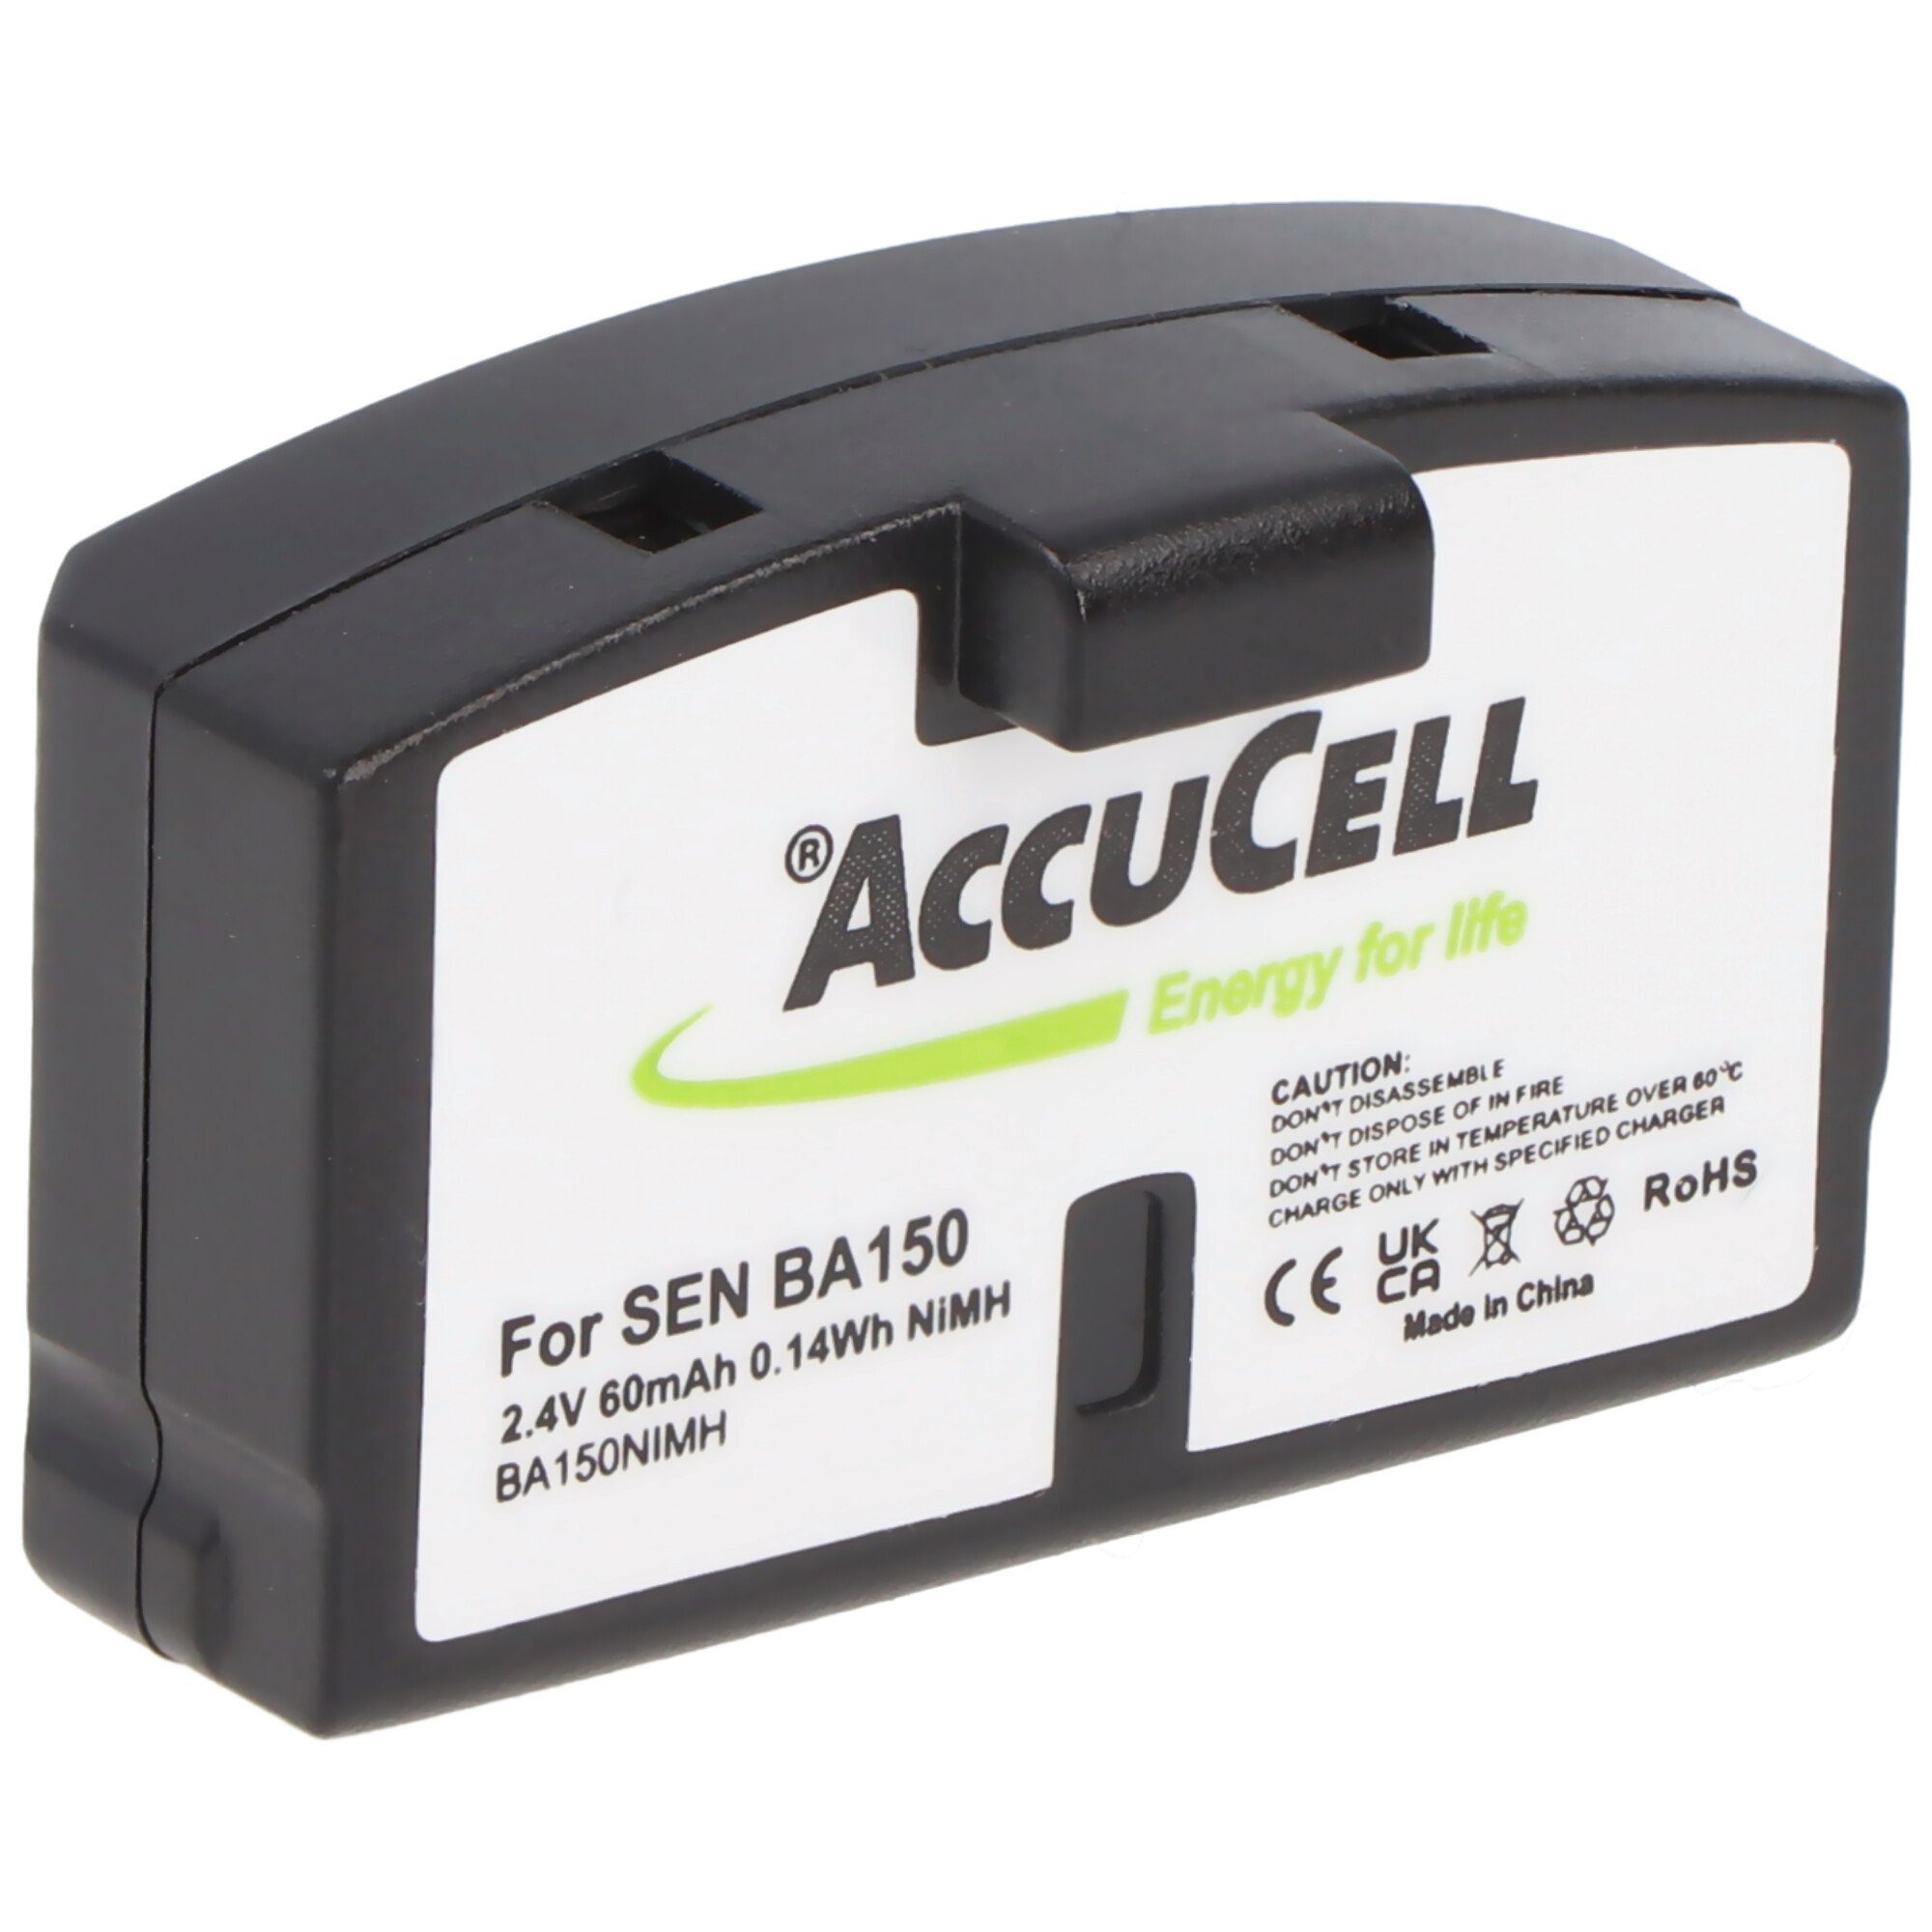 AccuCell Akku passend für Sennheiser BA150, BA151, BA152, RS6, TR820 NiMH Akku 60 mAh (2,4 V)